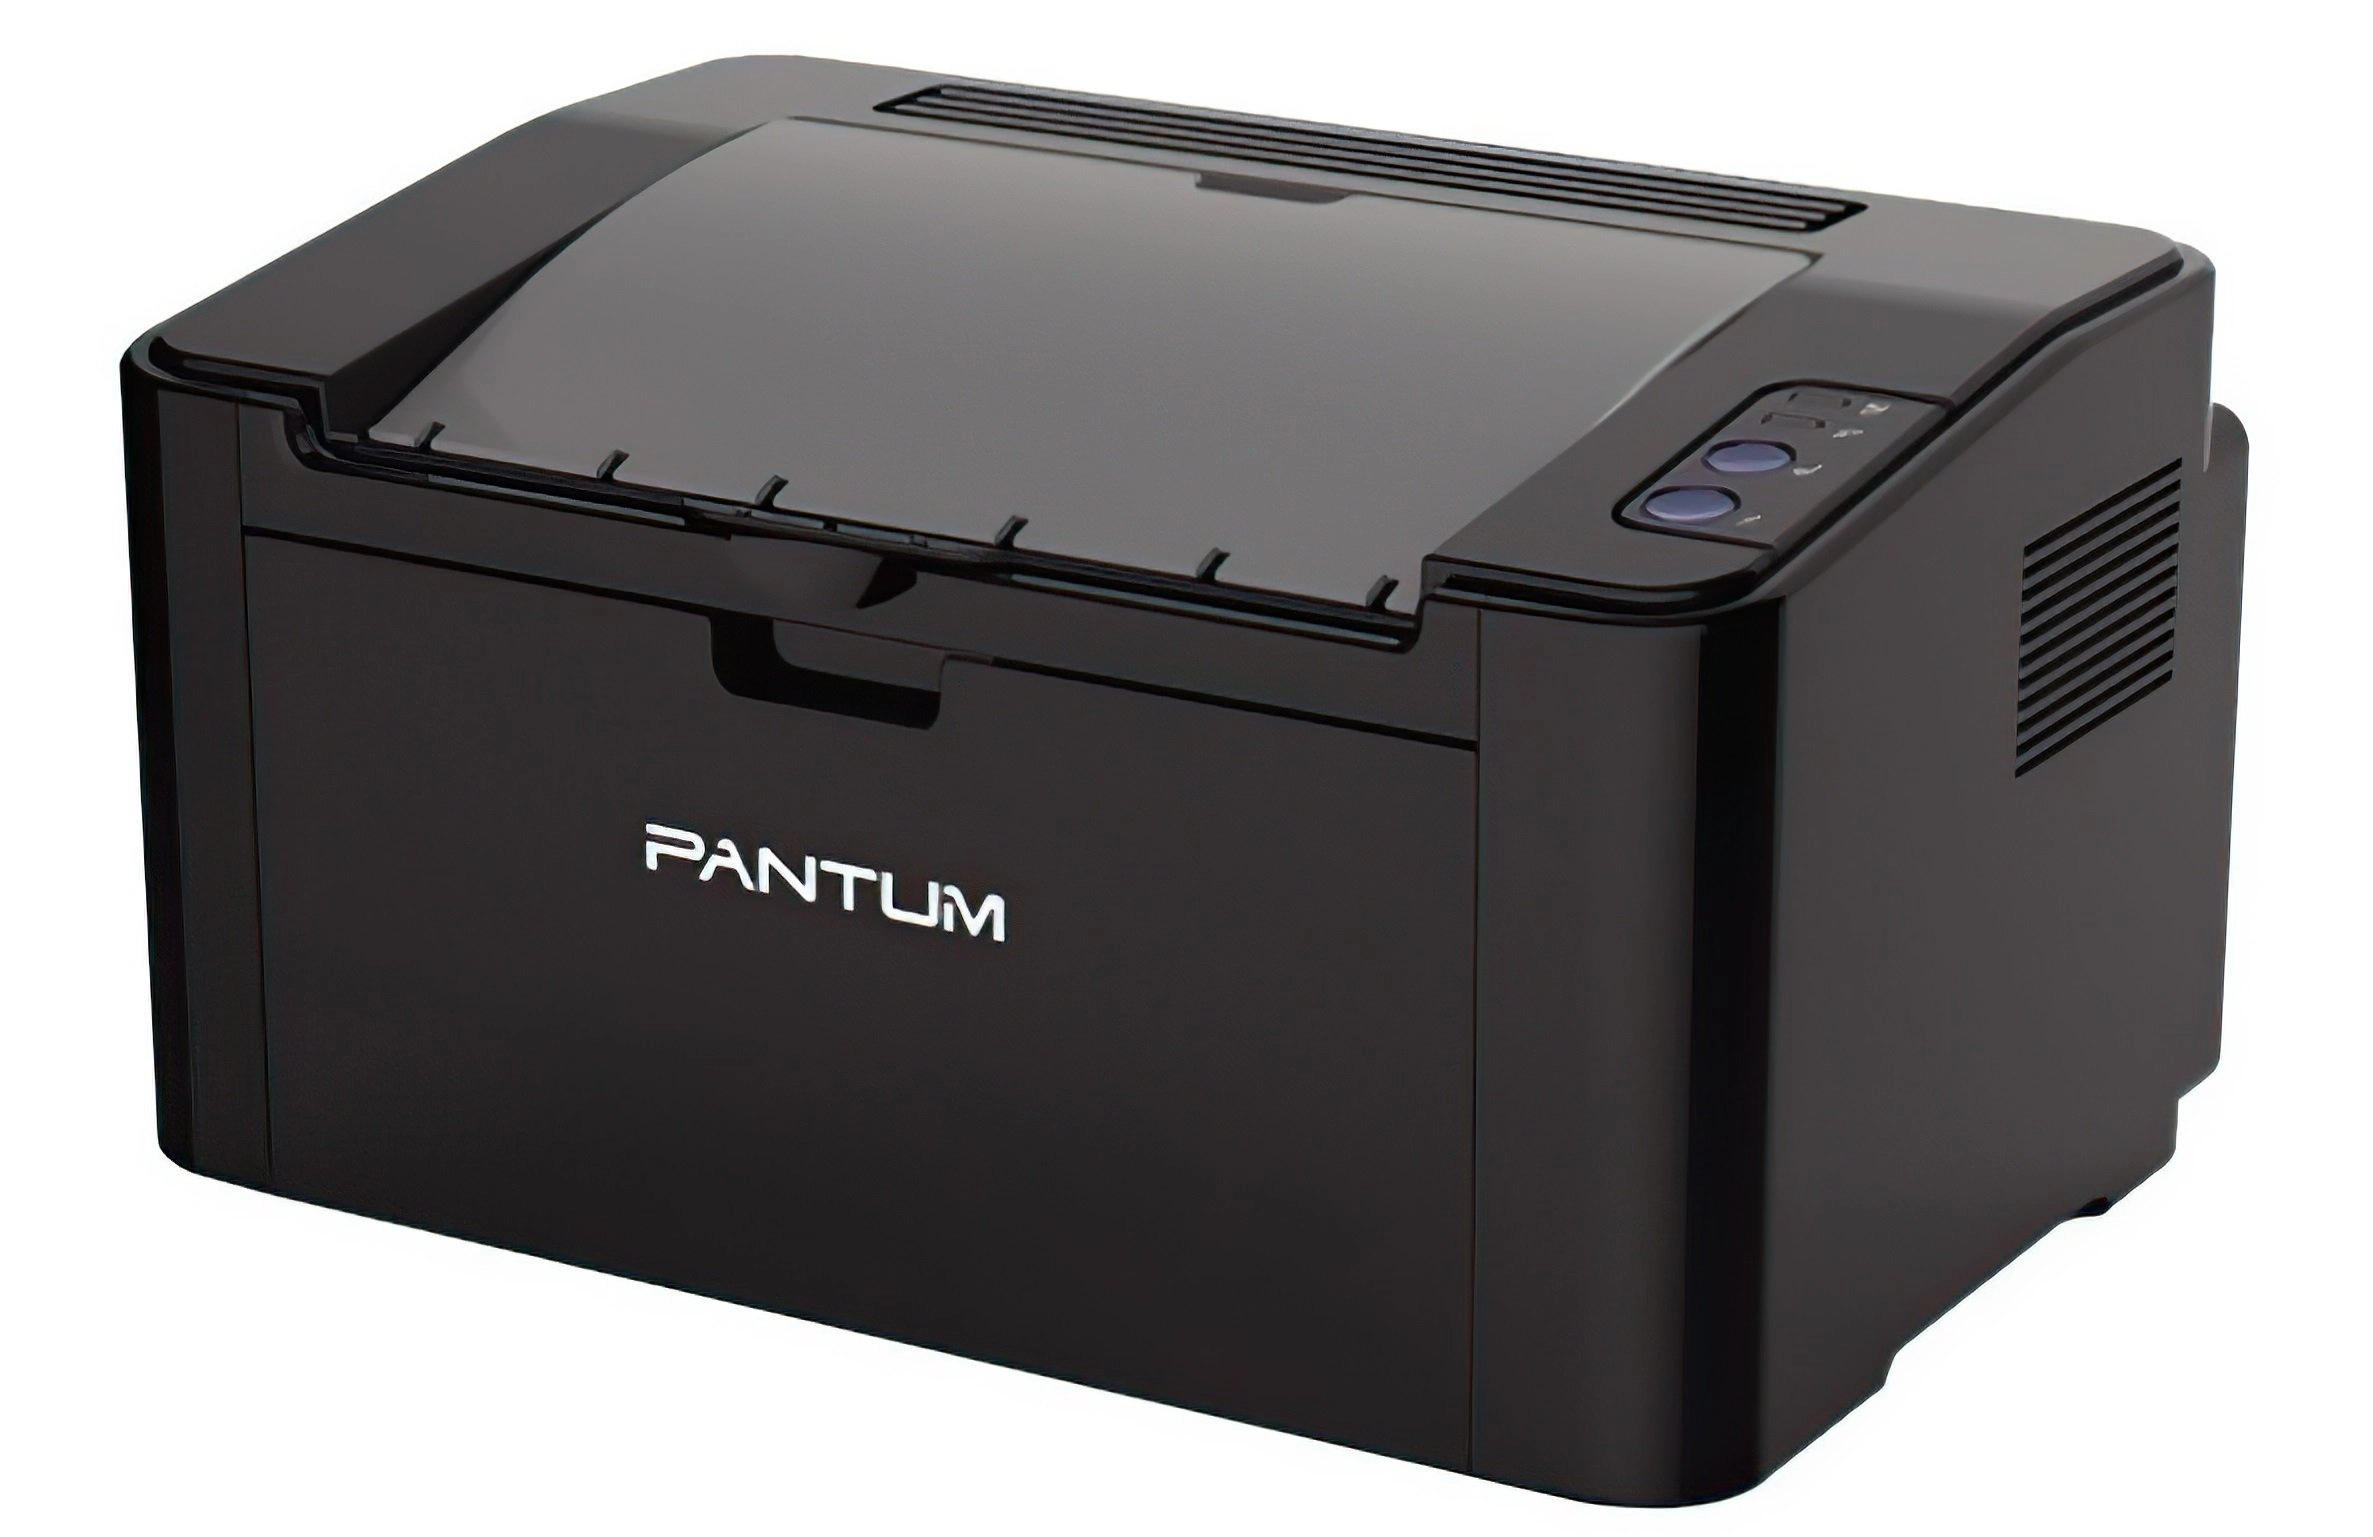 Купить принтер pantum p2207. Pantum p2500w. Принтер лазерный Pantum p2200. Принтер лазерный Pantum p2516 a4. Лазерный монохромный принтер Pantum p2500w.